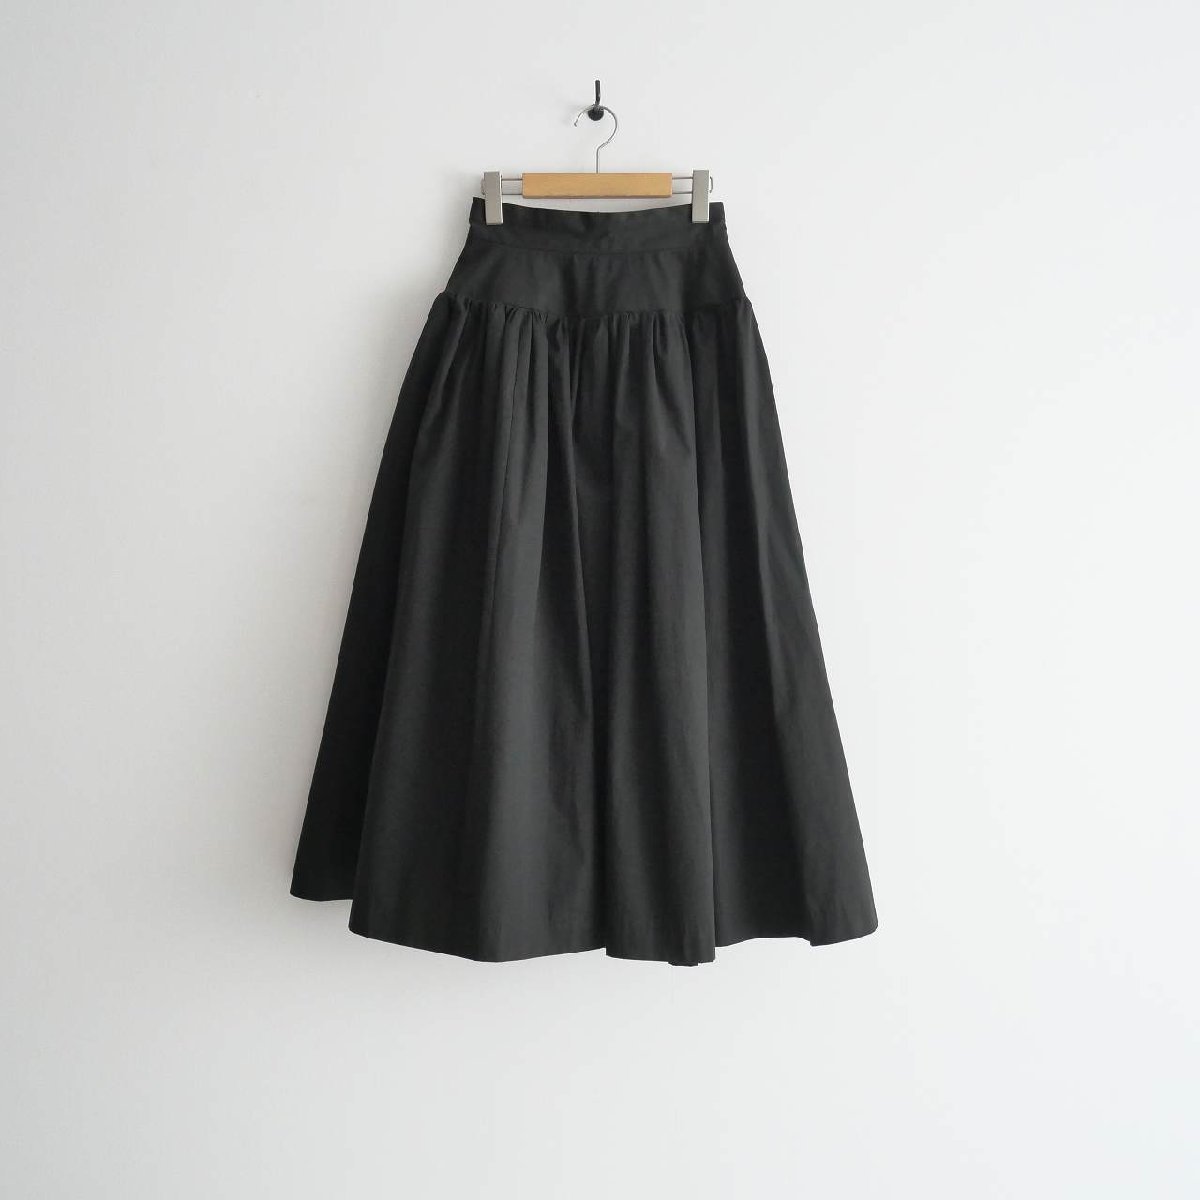 2023 / SiS シス / Sister tokyo シスタートウキョウ / Dress skirt スカート / 23SS-005 / 2305-1352